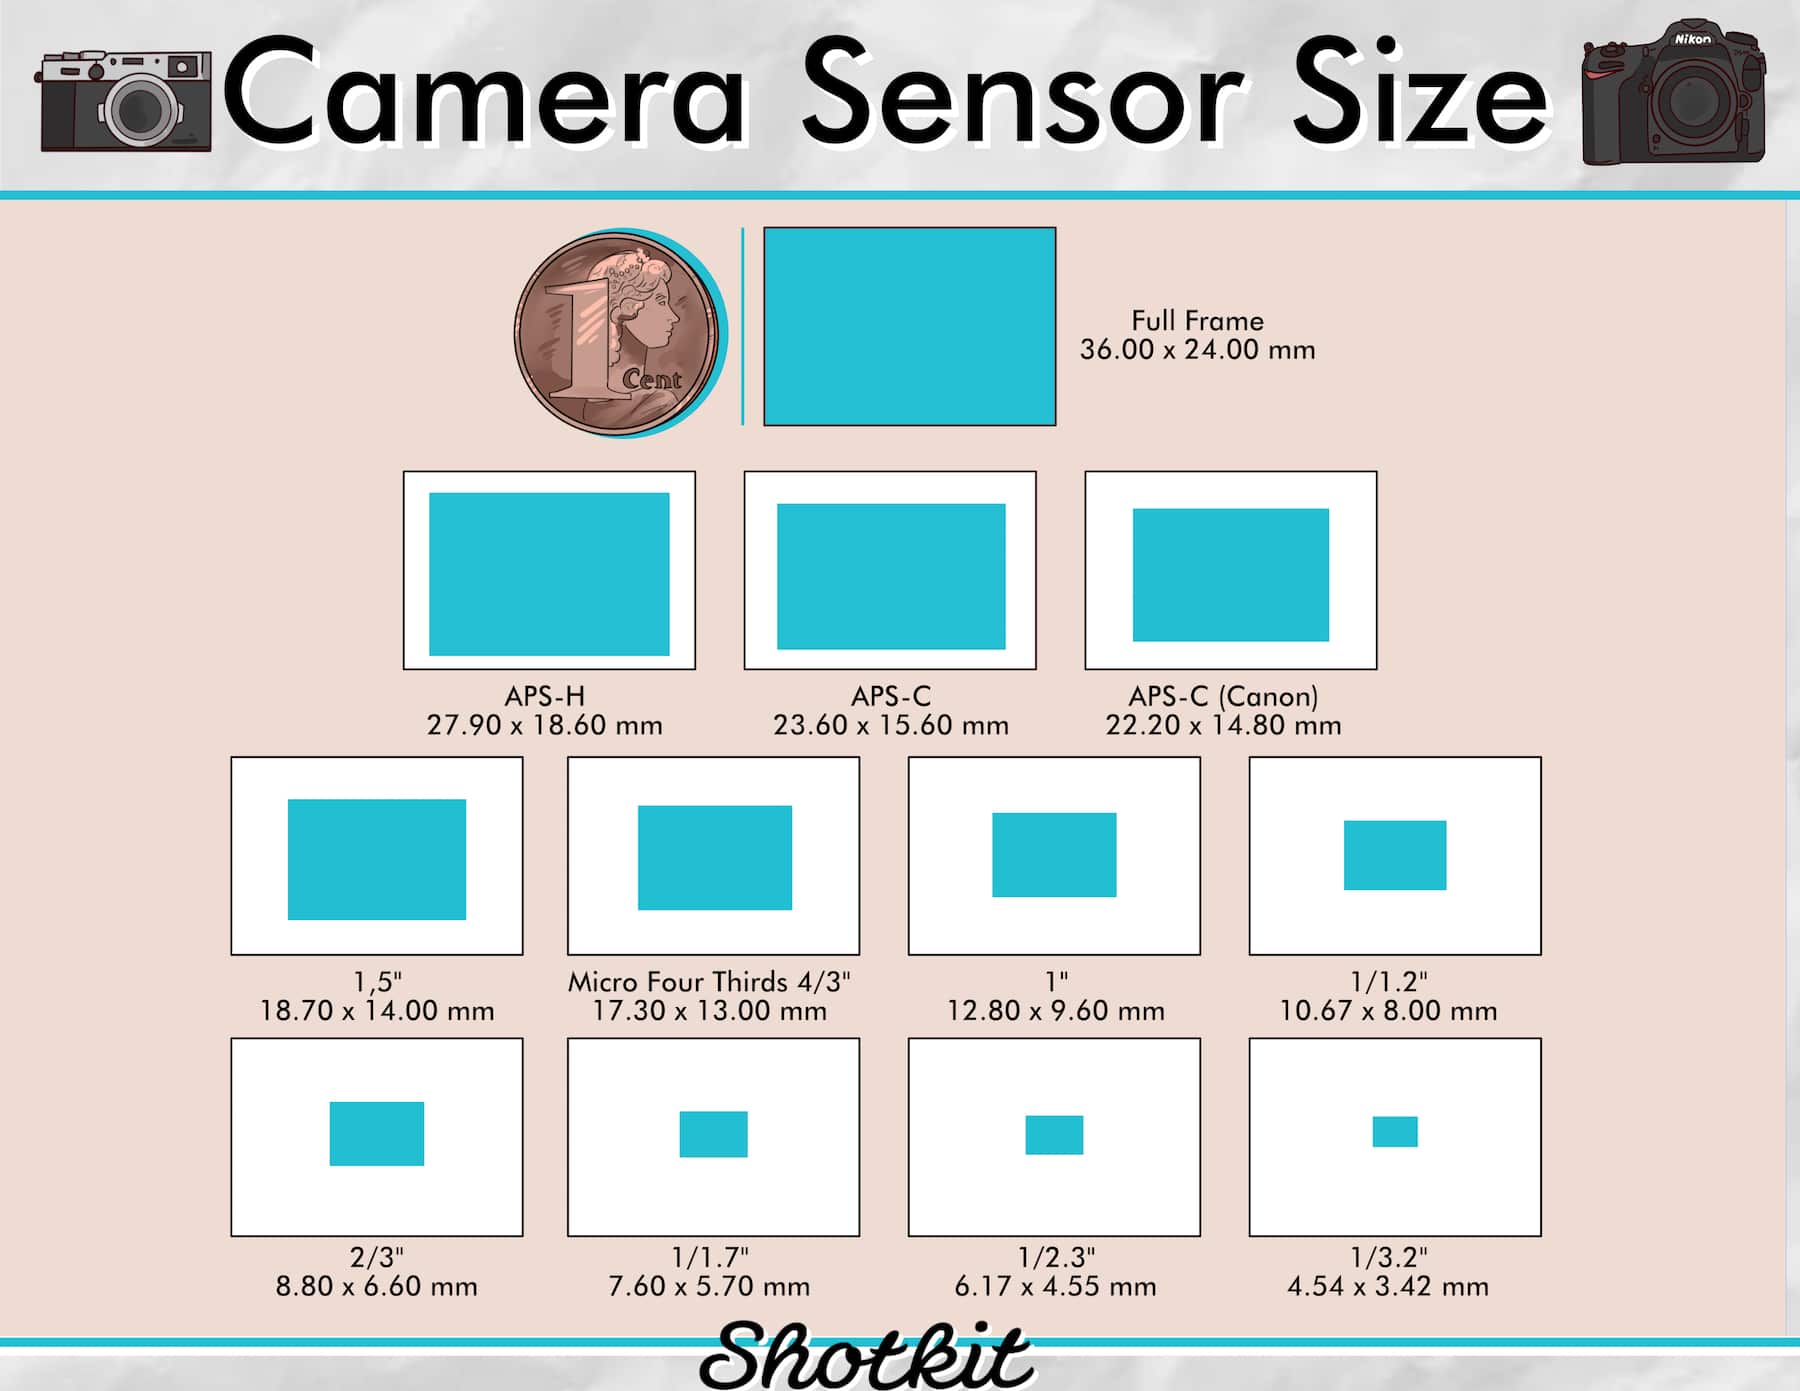 Camera Sensor Size article